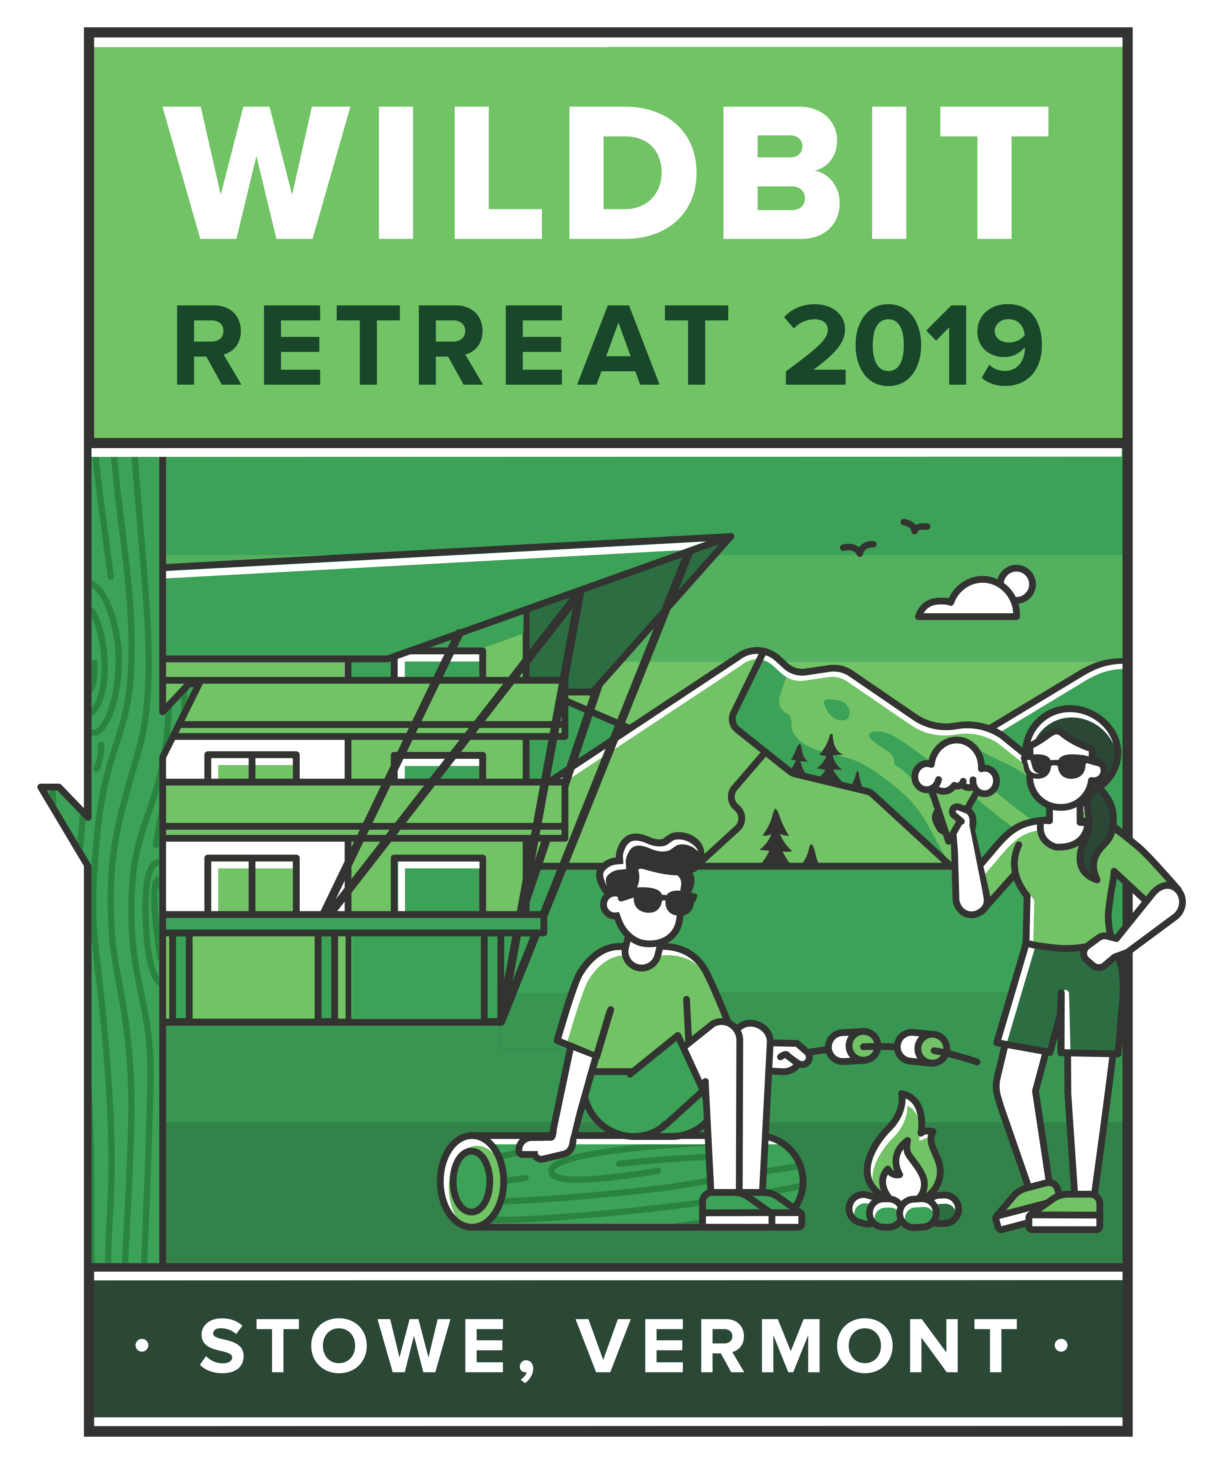 Wildbit Retreat 2019 — Stowe, Vermont